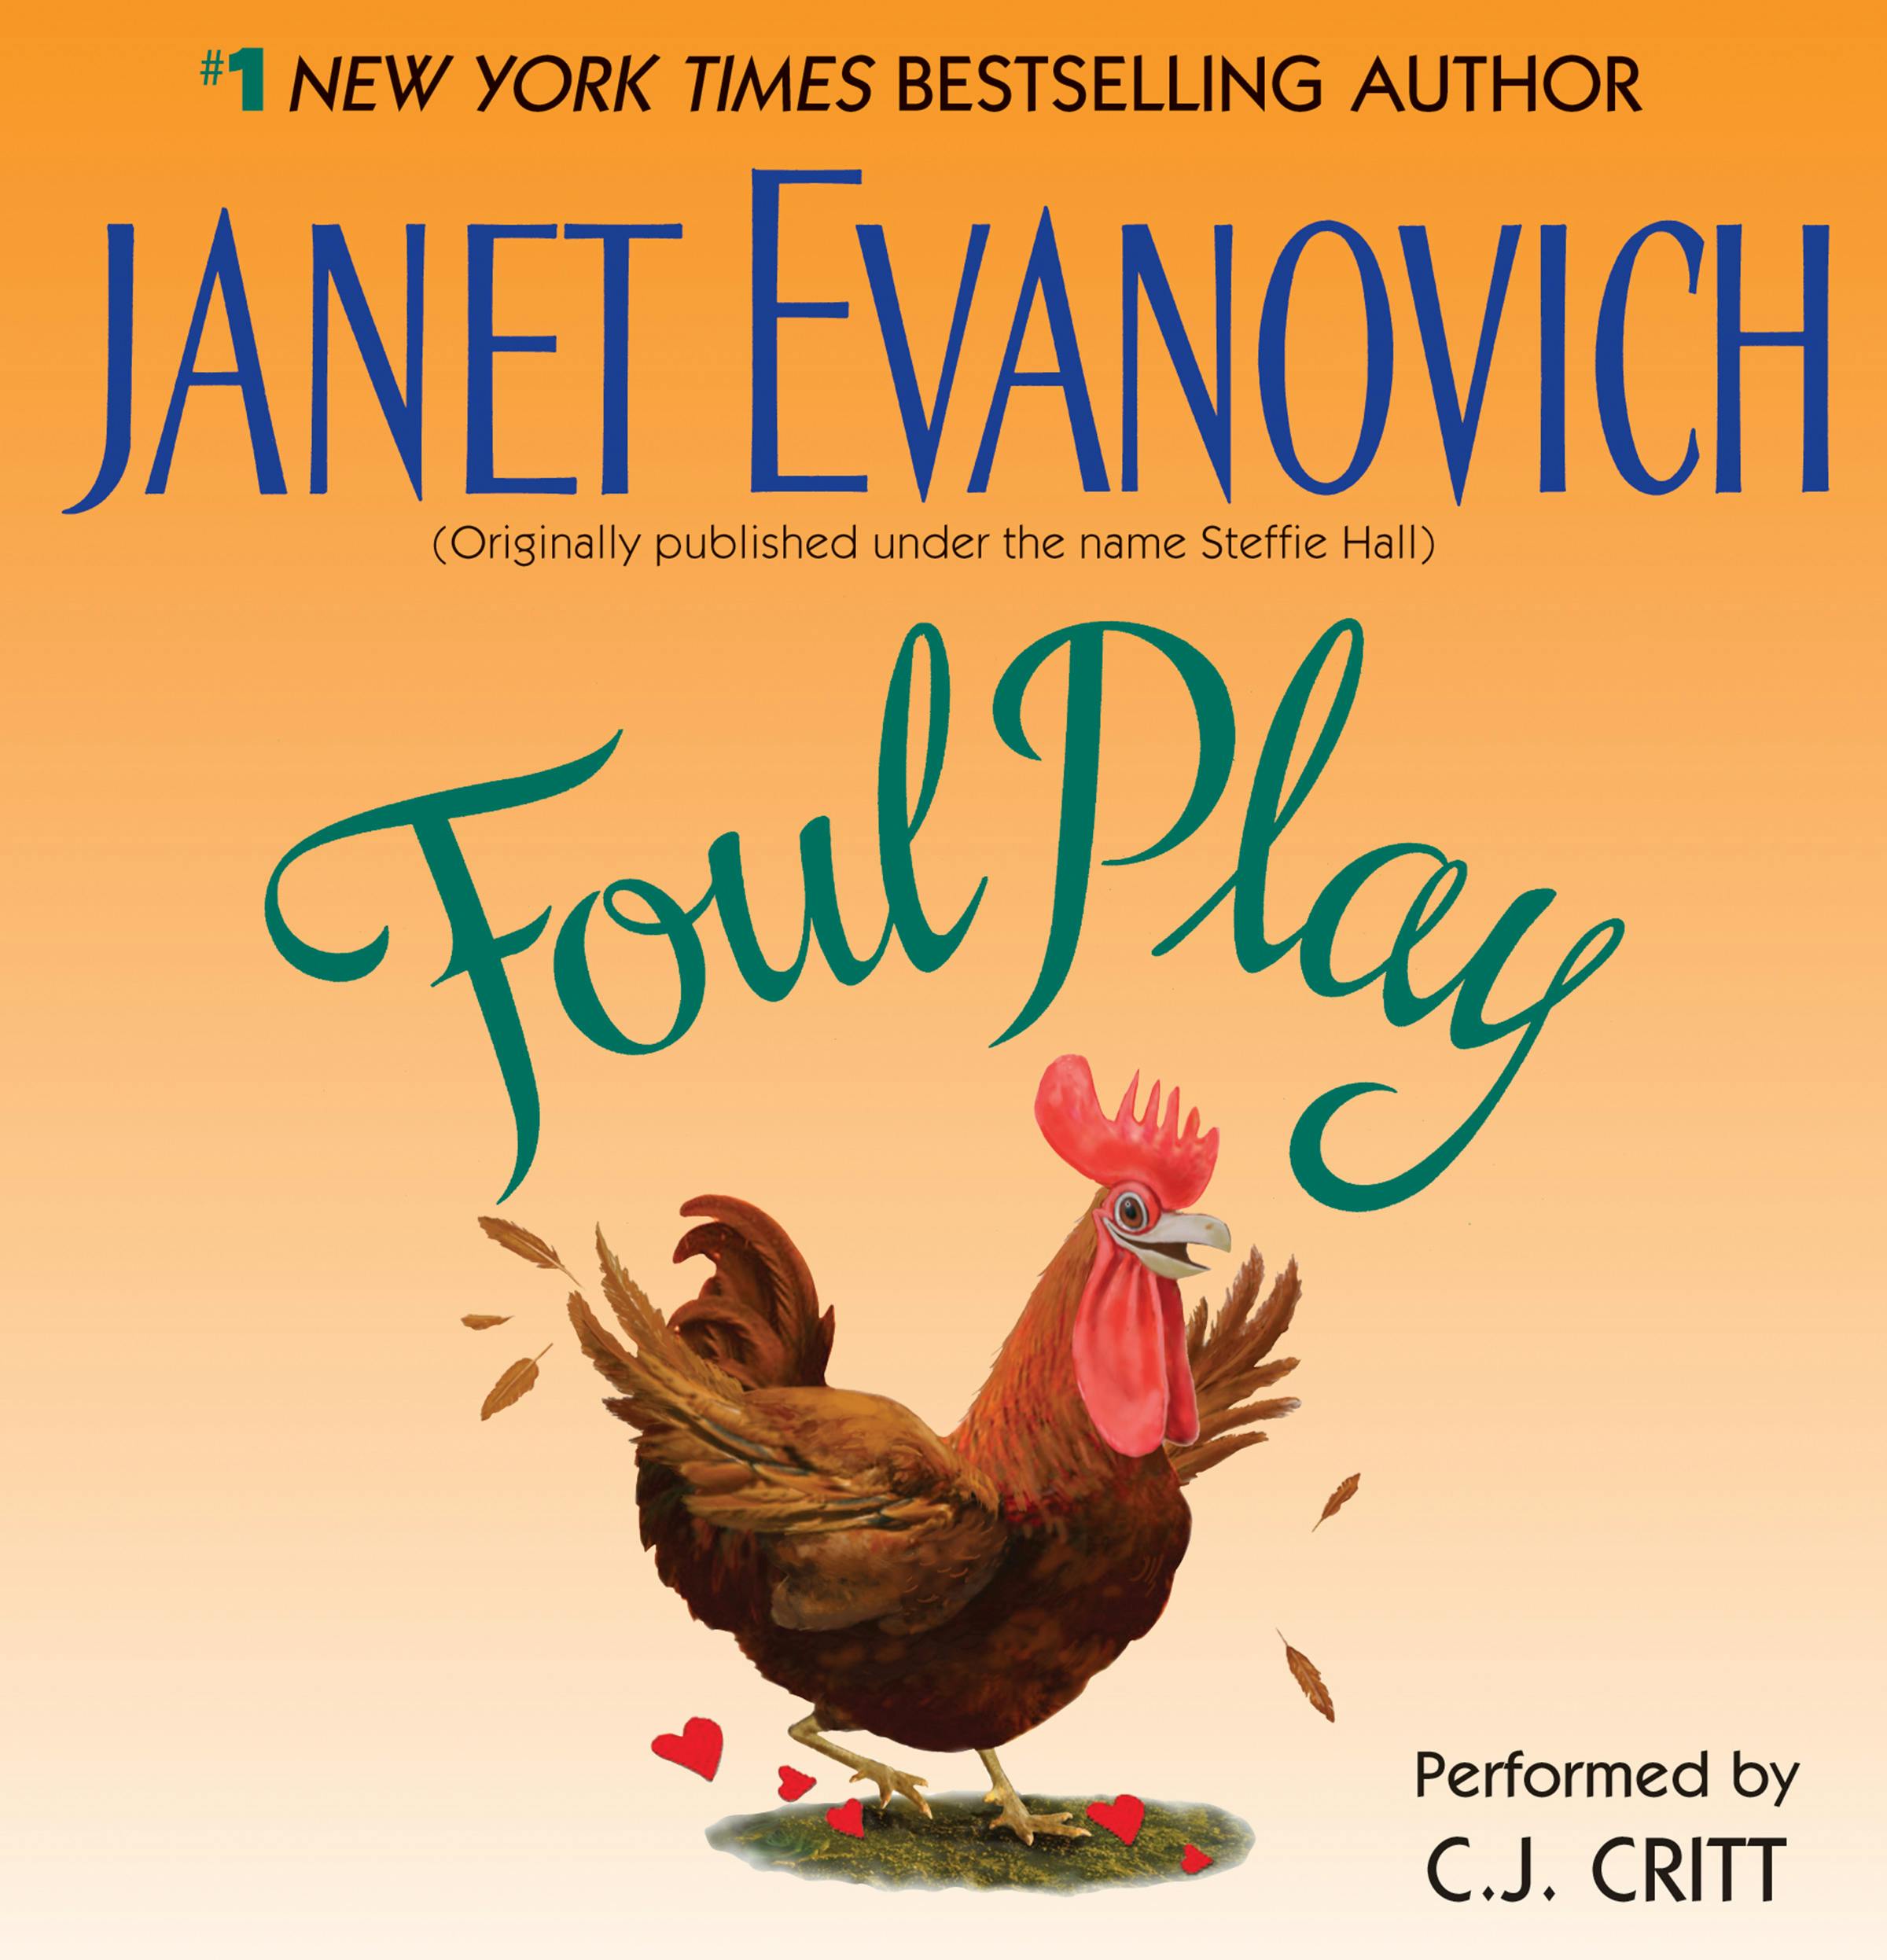 Foul Play - Janet Evanovich